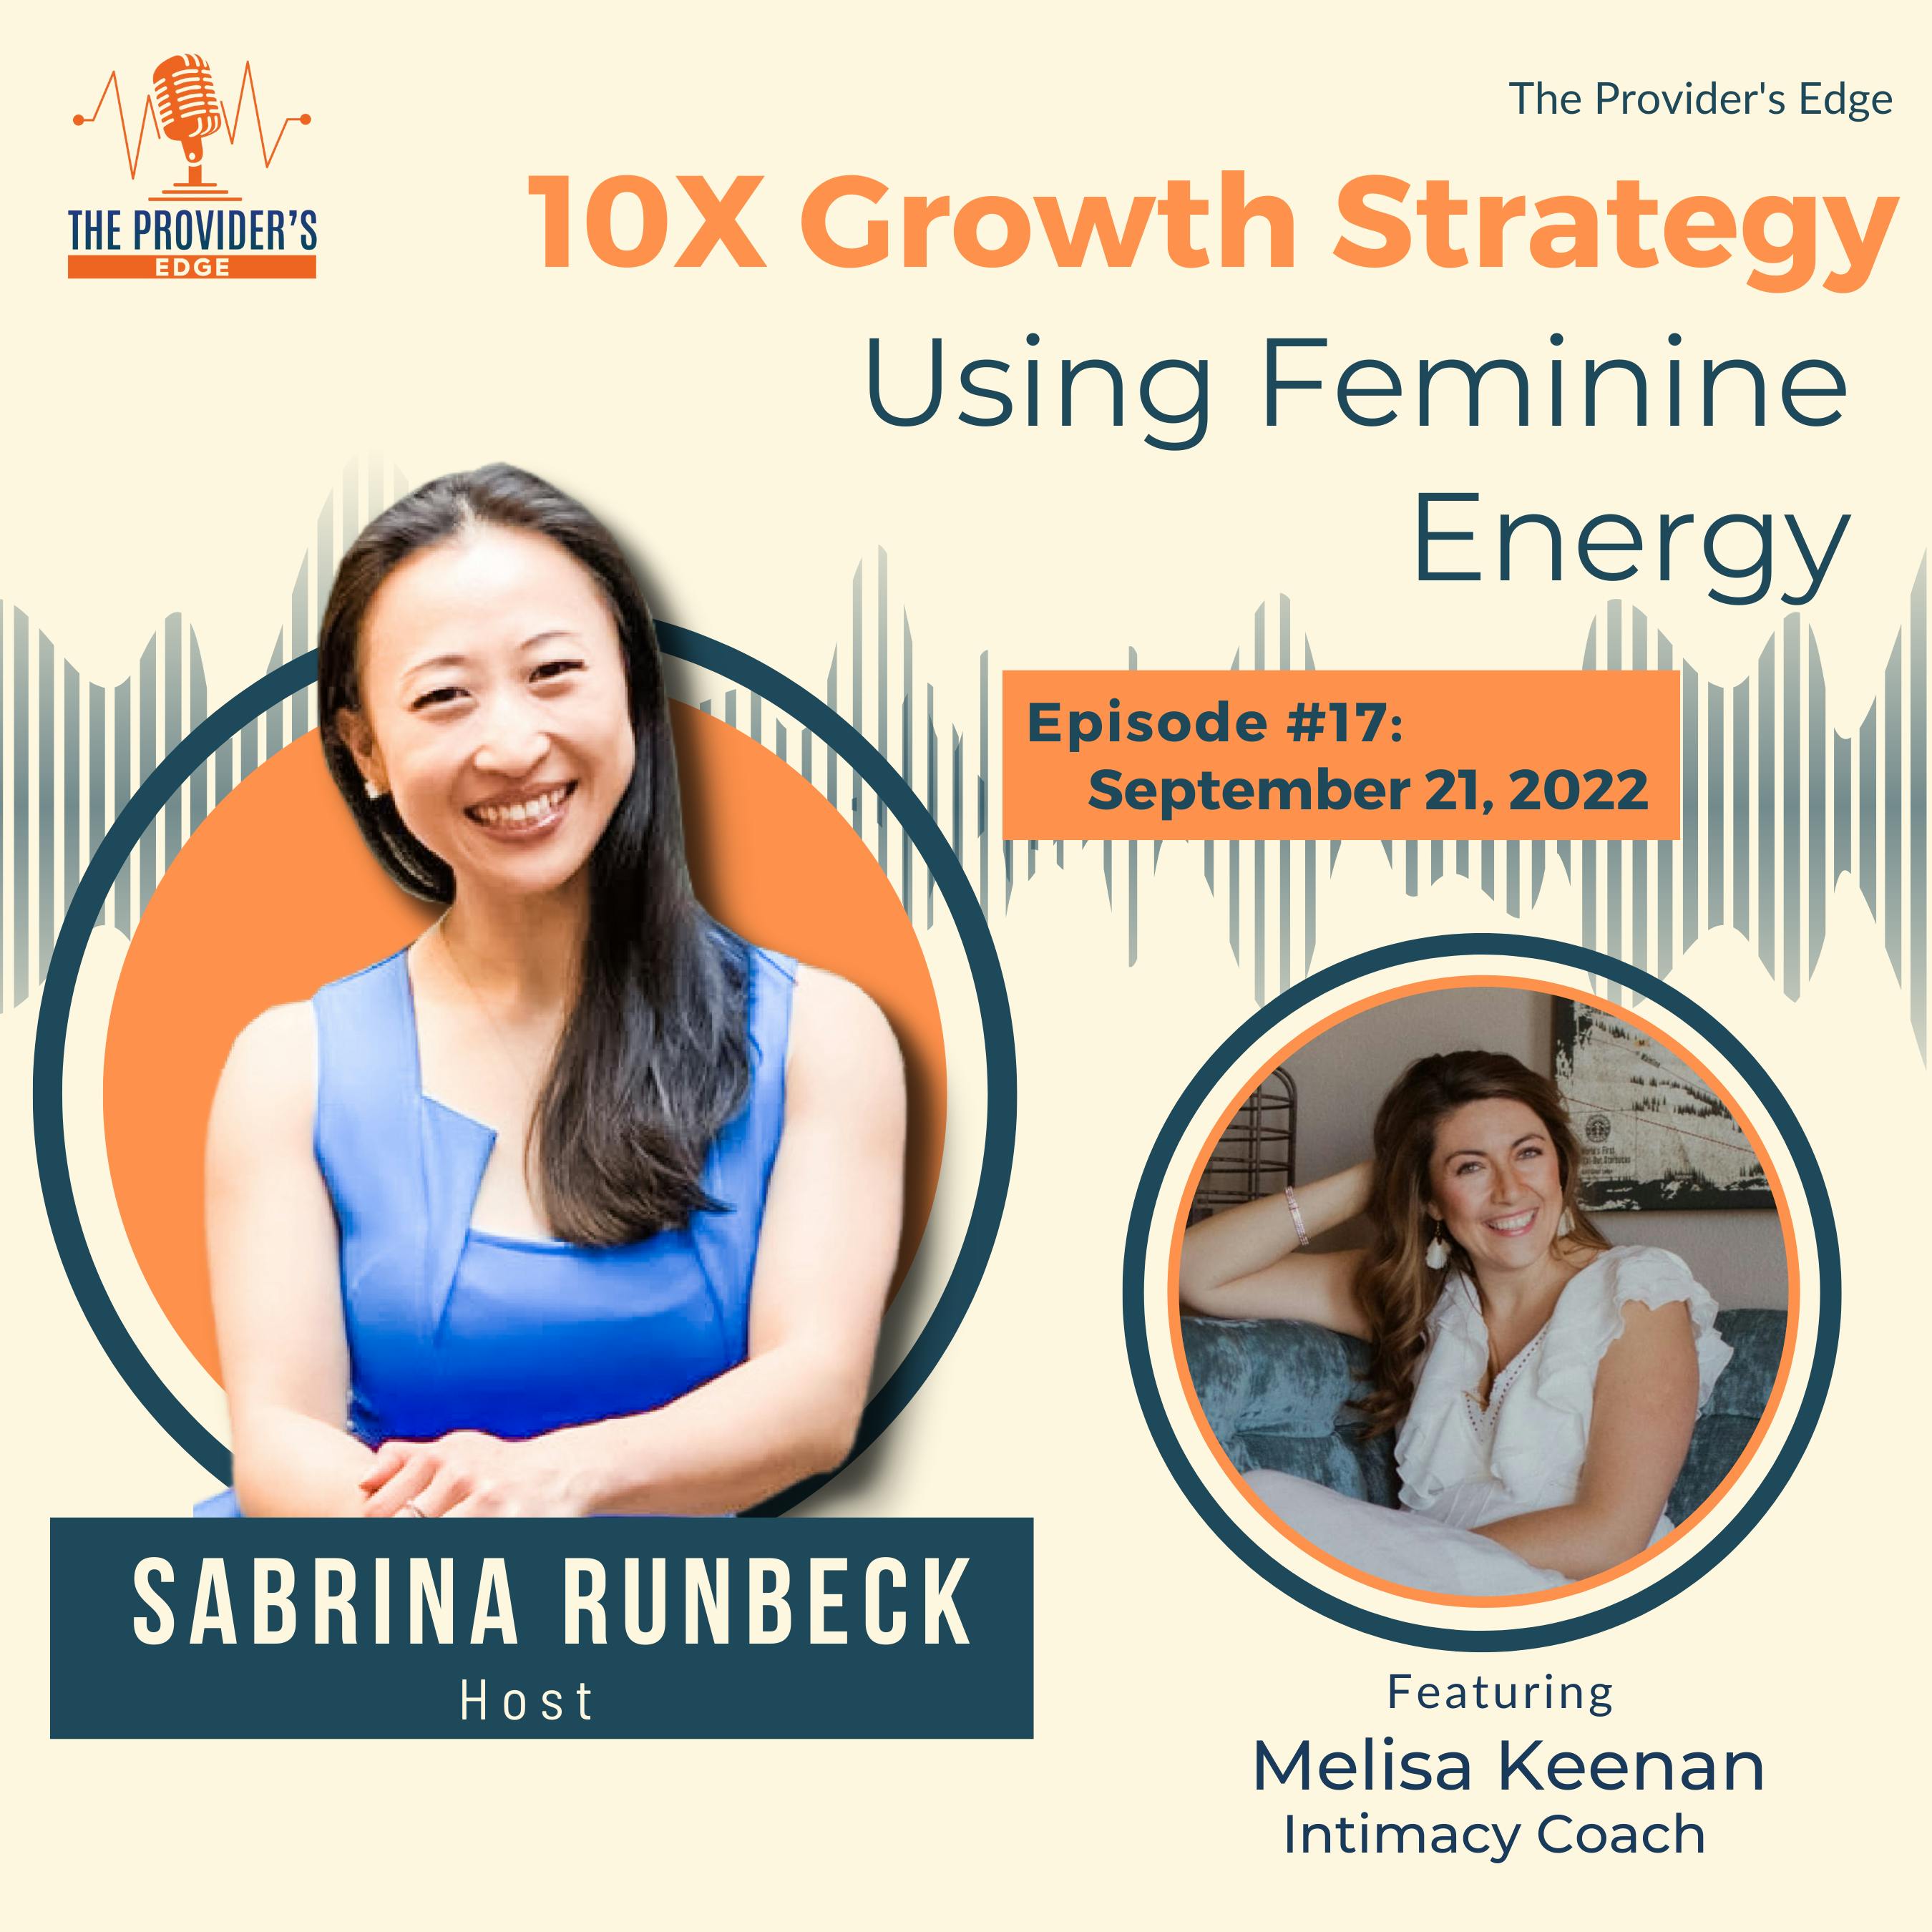 10X Growth Strategy Using Feminine Energy with Melissa Keenan Ep 17